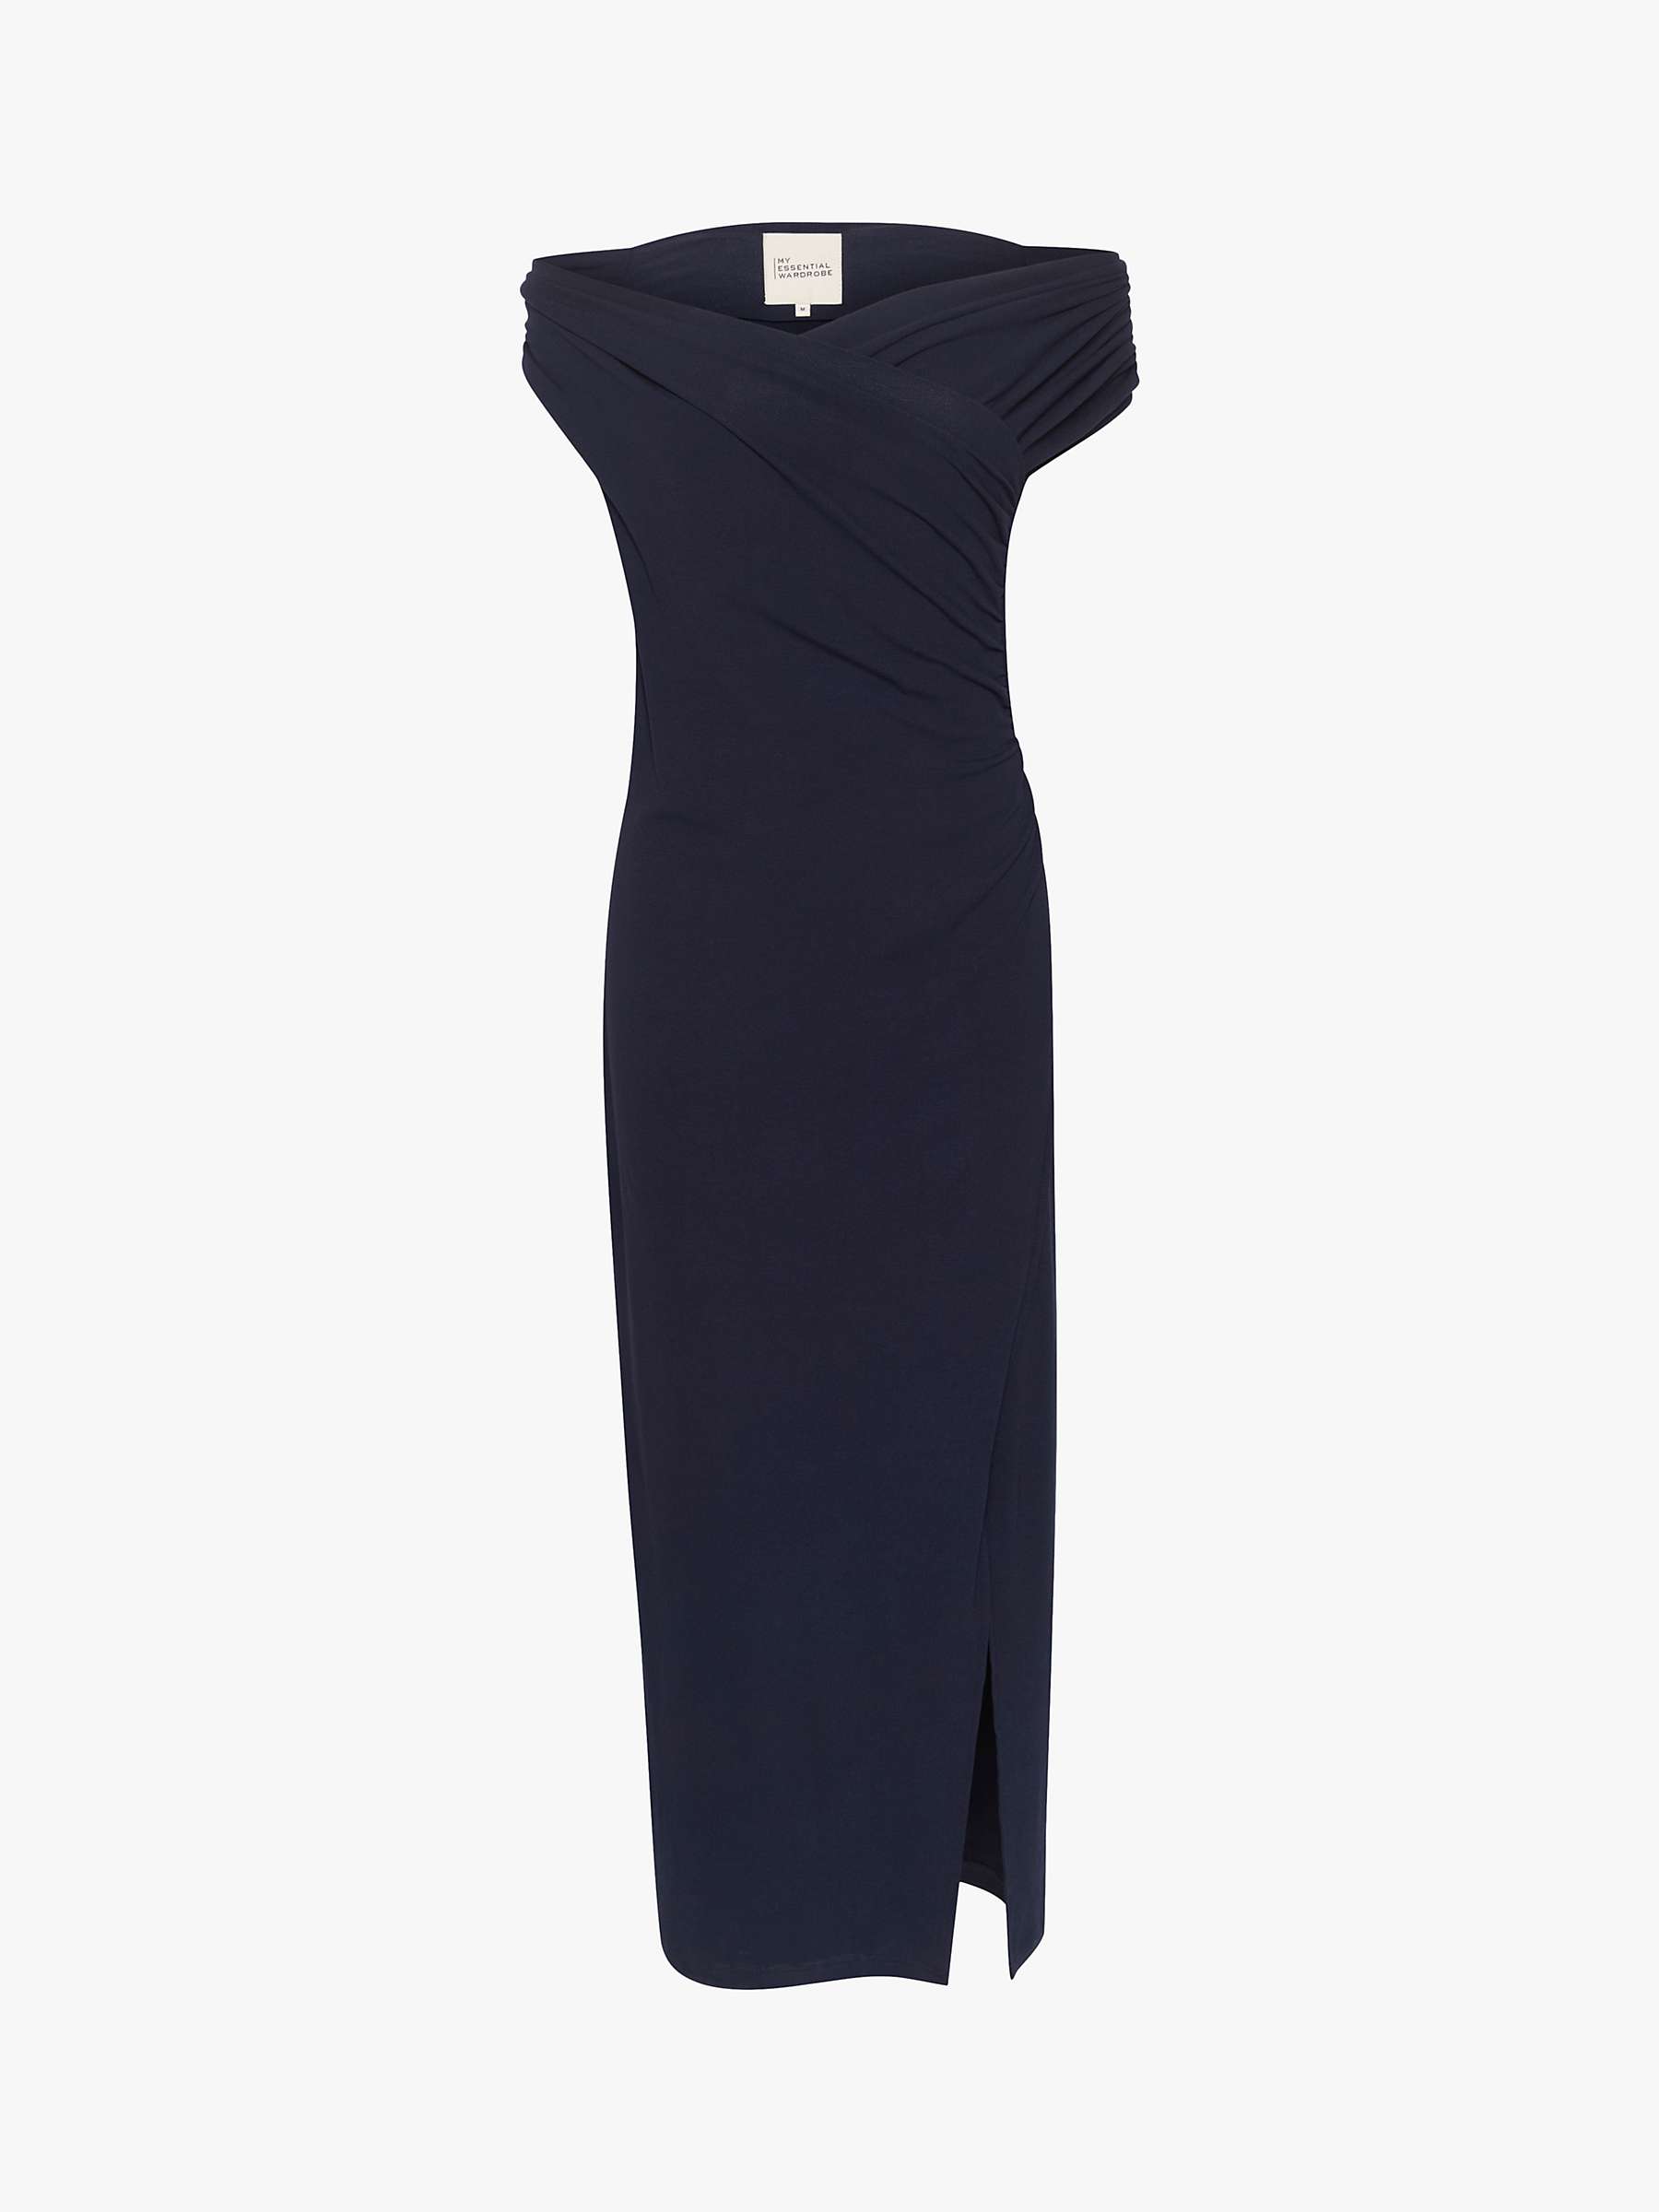 Buy MY ESSENTIAL WARDROBE Nupti Slim Fit Jersey Midi Dress, Total Eclipse Online at johnlewis.com